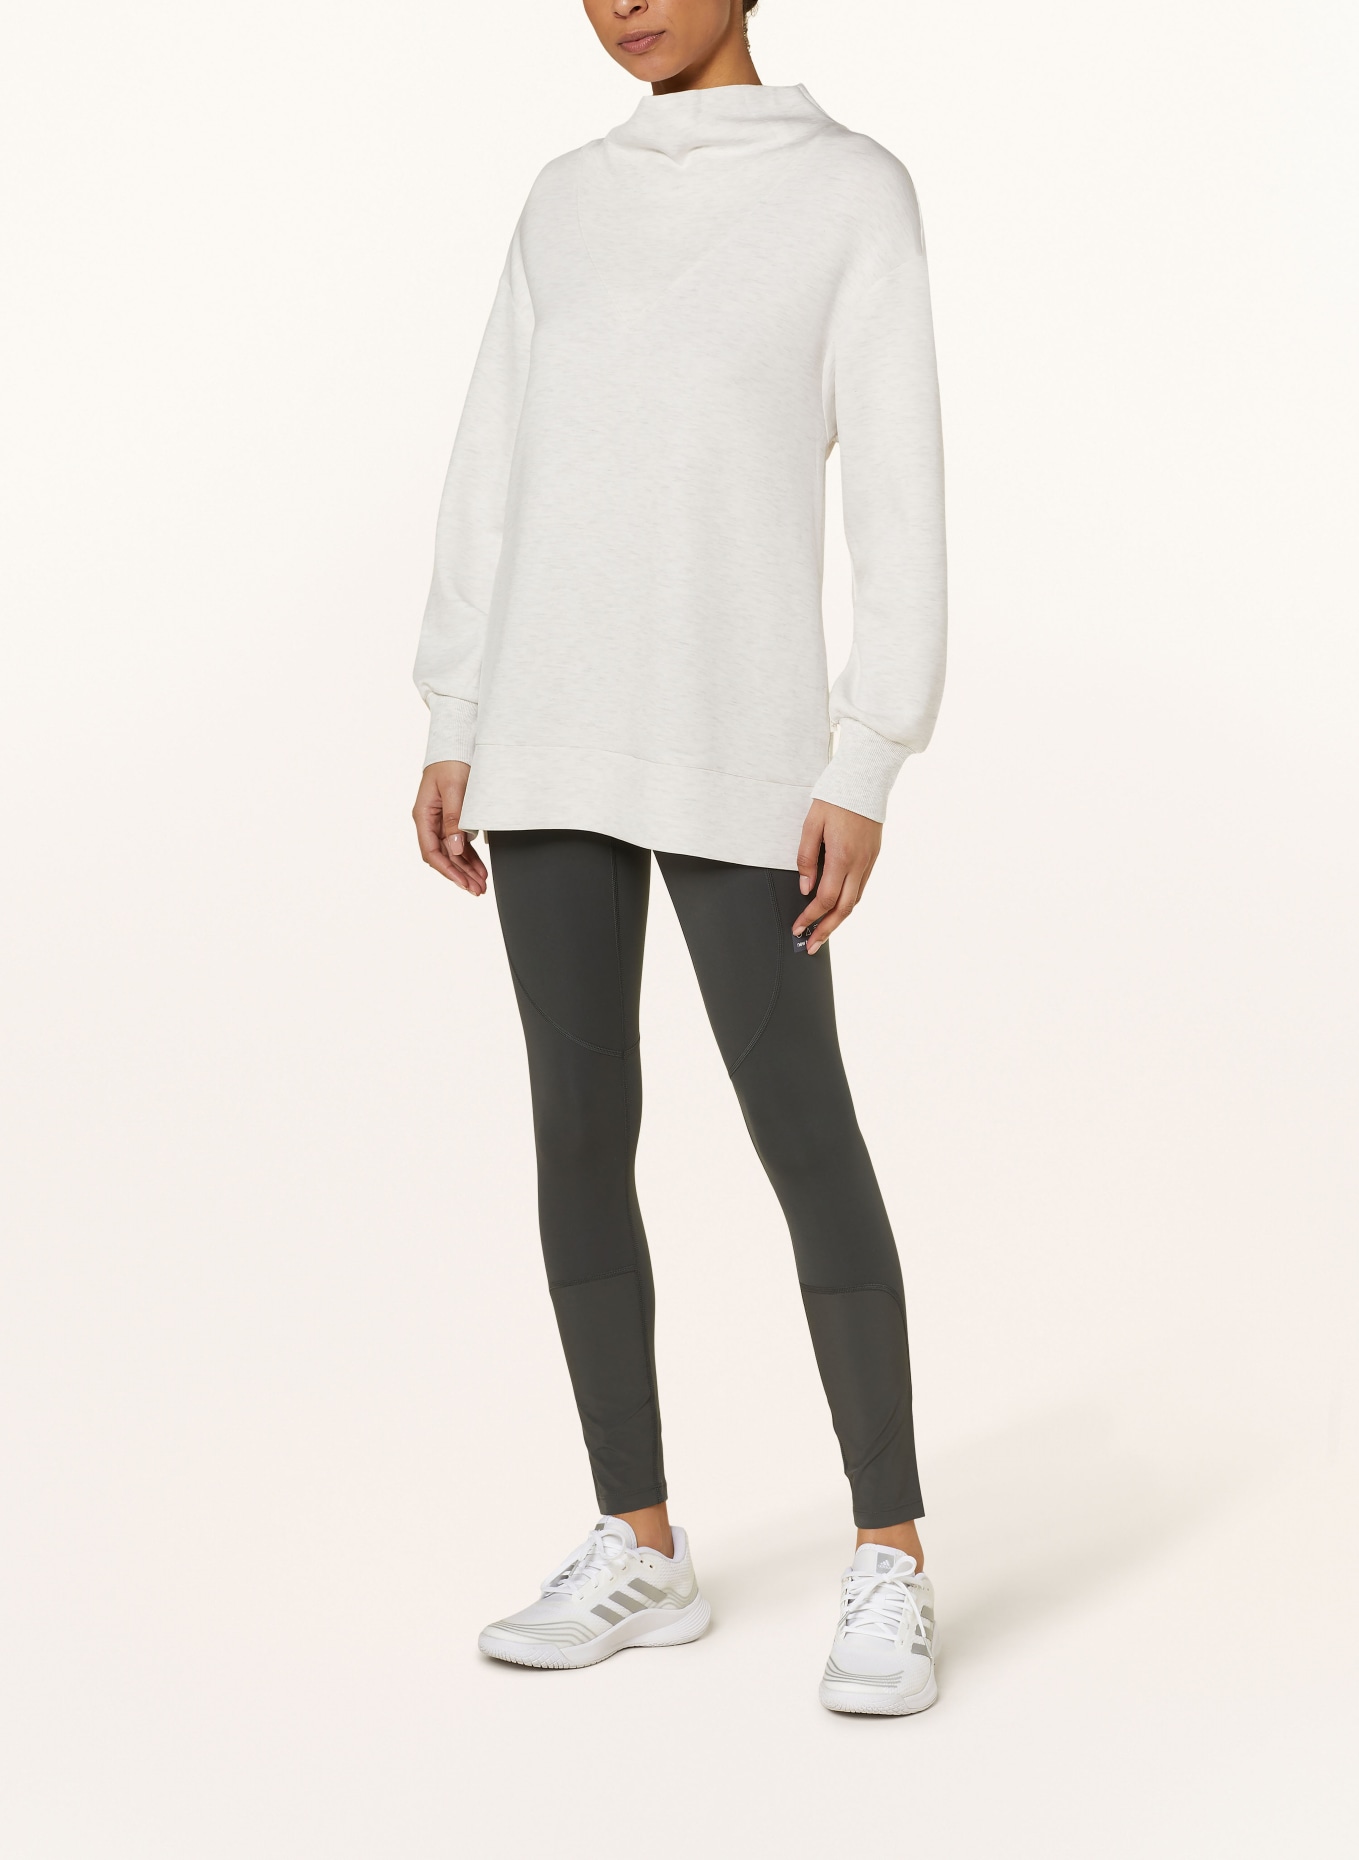 VARLEY Sweatshirt MODENA, Farbe: HELLGRAU (Bild 2)